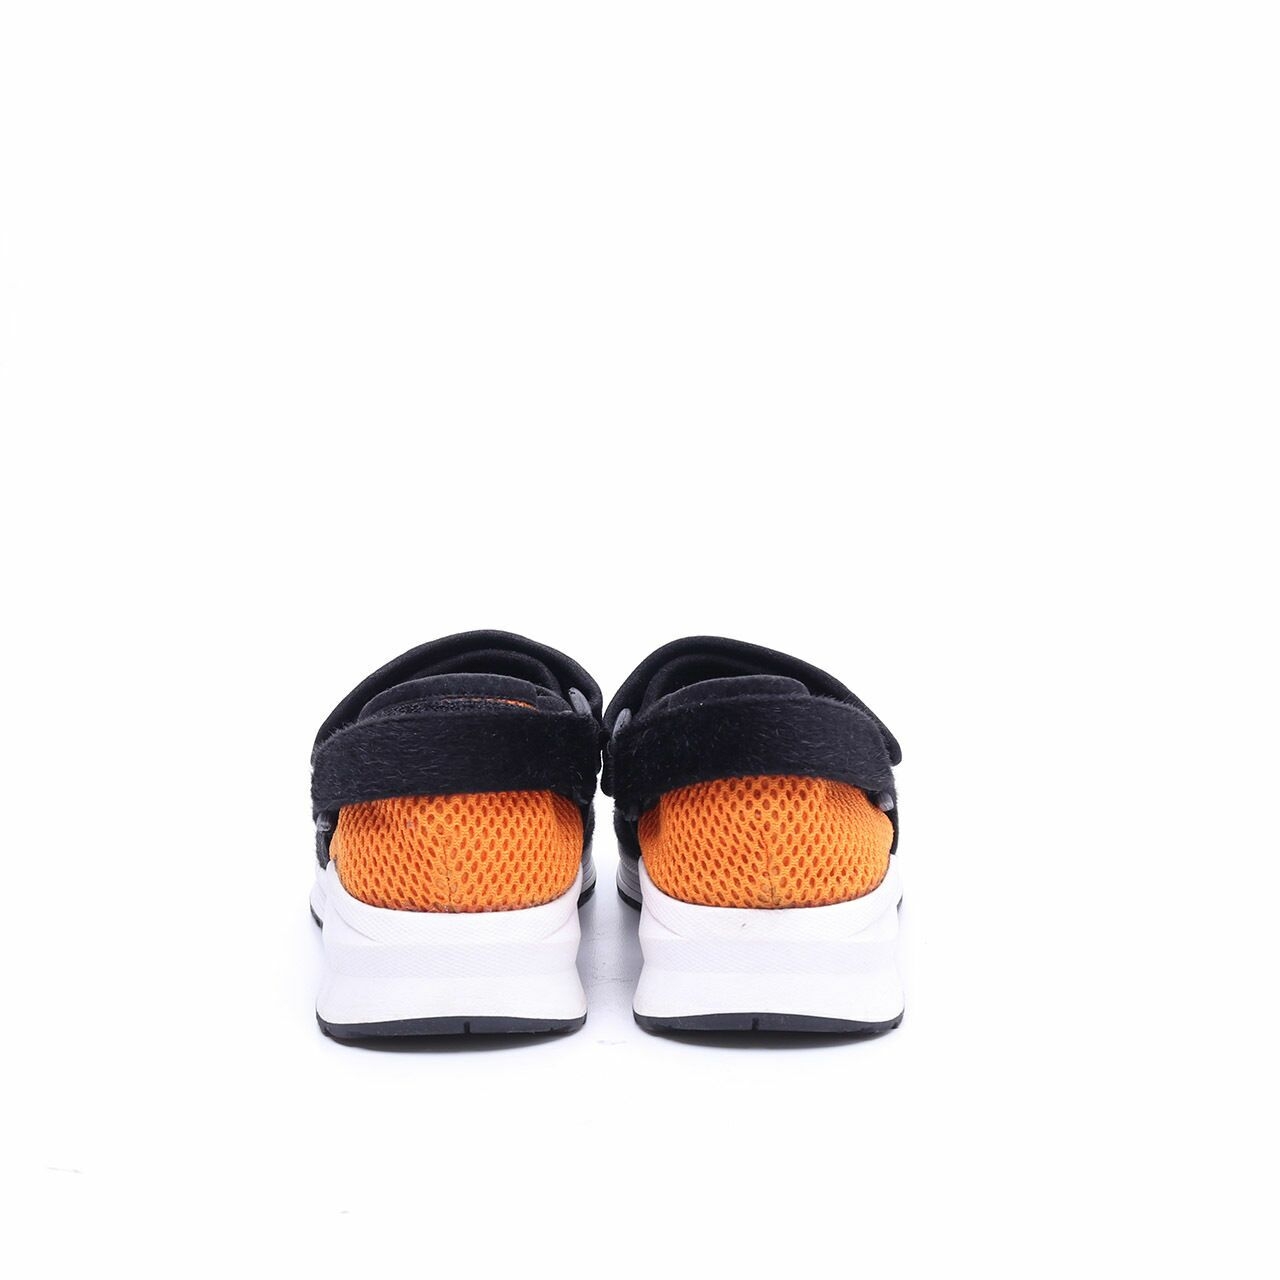 Chiel Black & Orange Sneakers